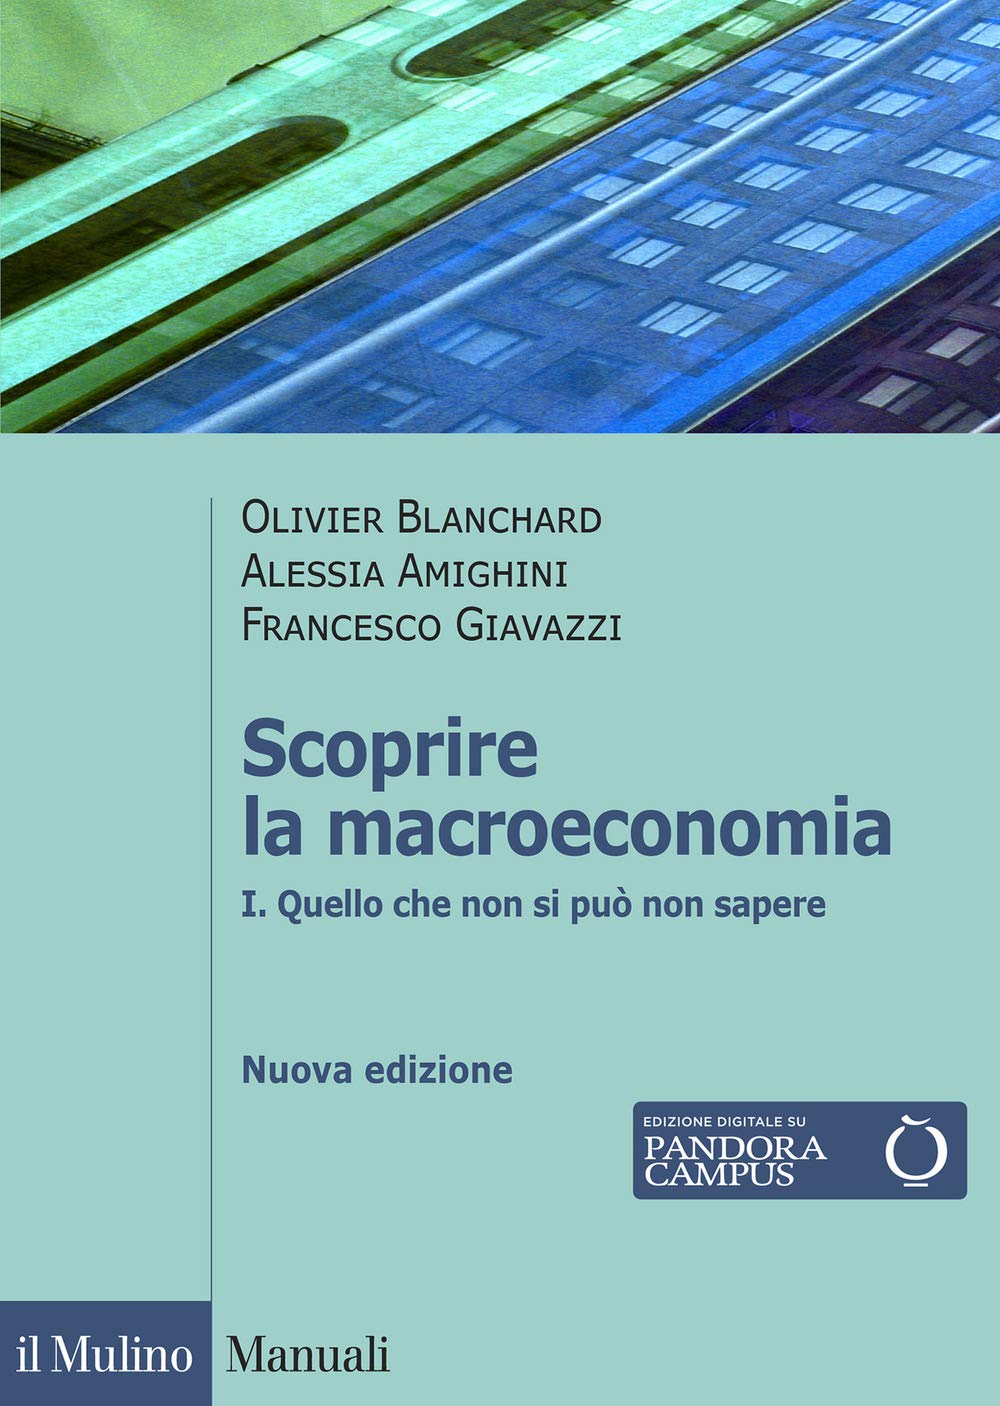 Copertina manuale Macroeconomia